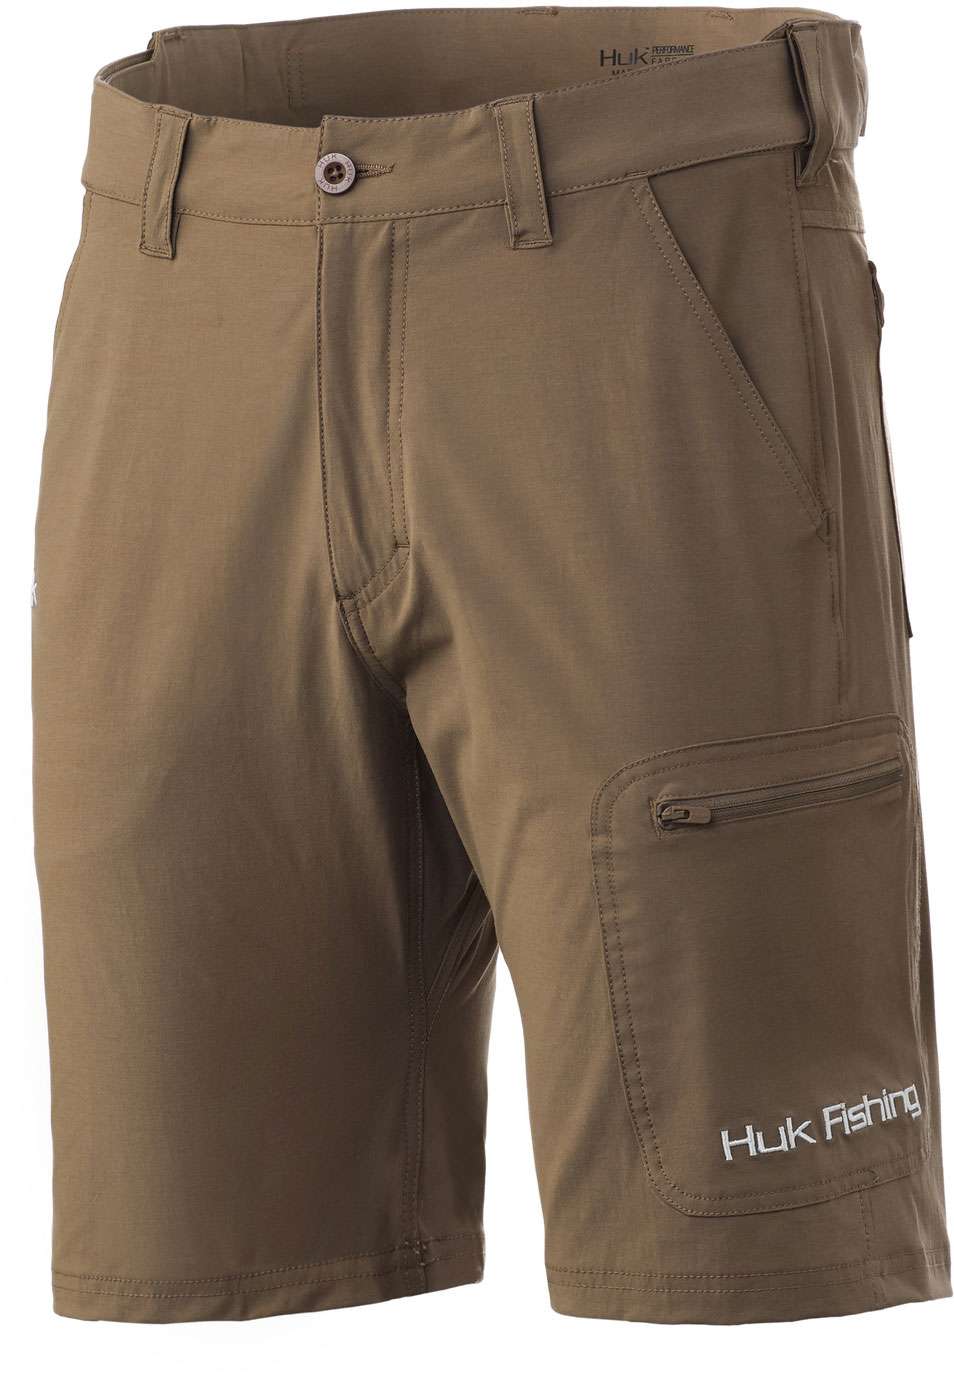 Huk Next Level Pants - Overcast Grey